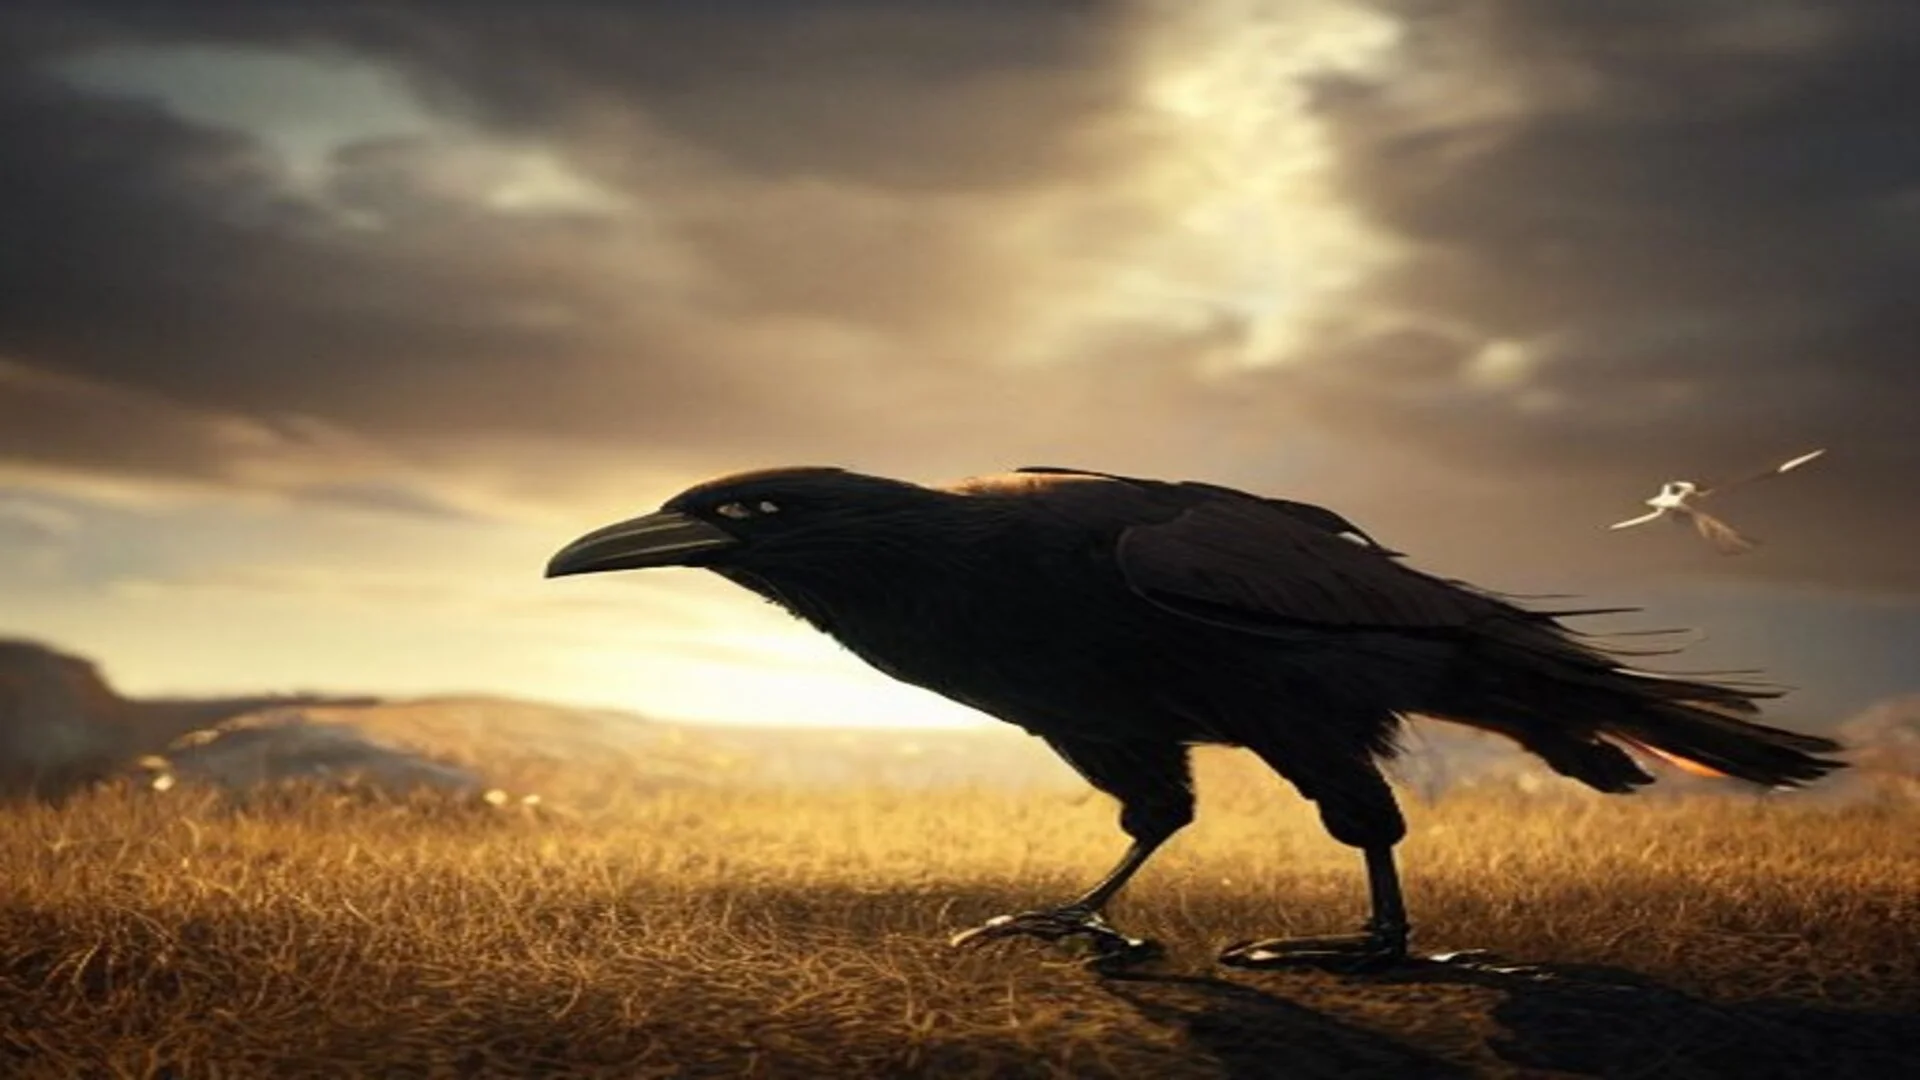 The Black Crow as a Messenger